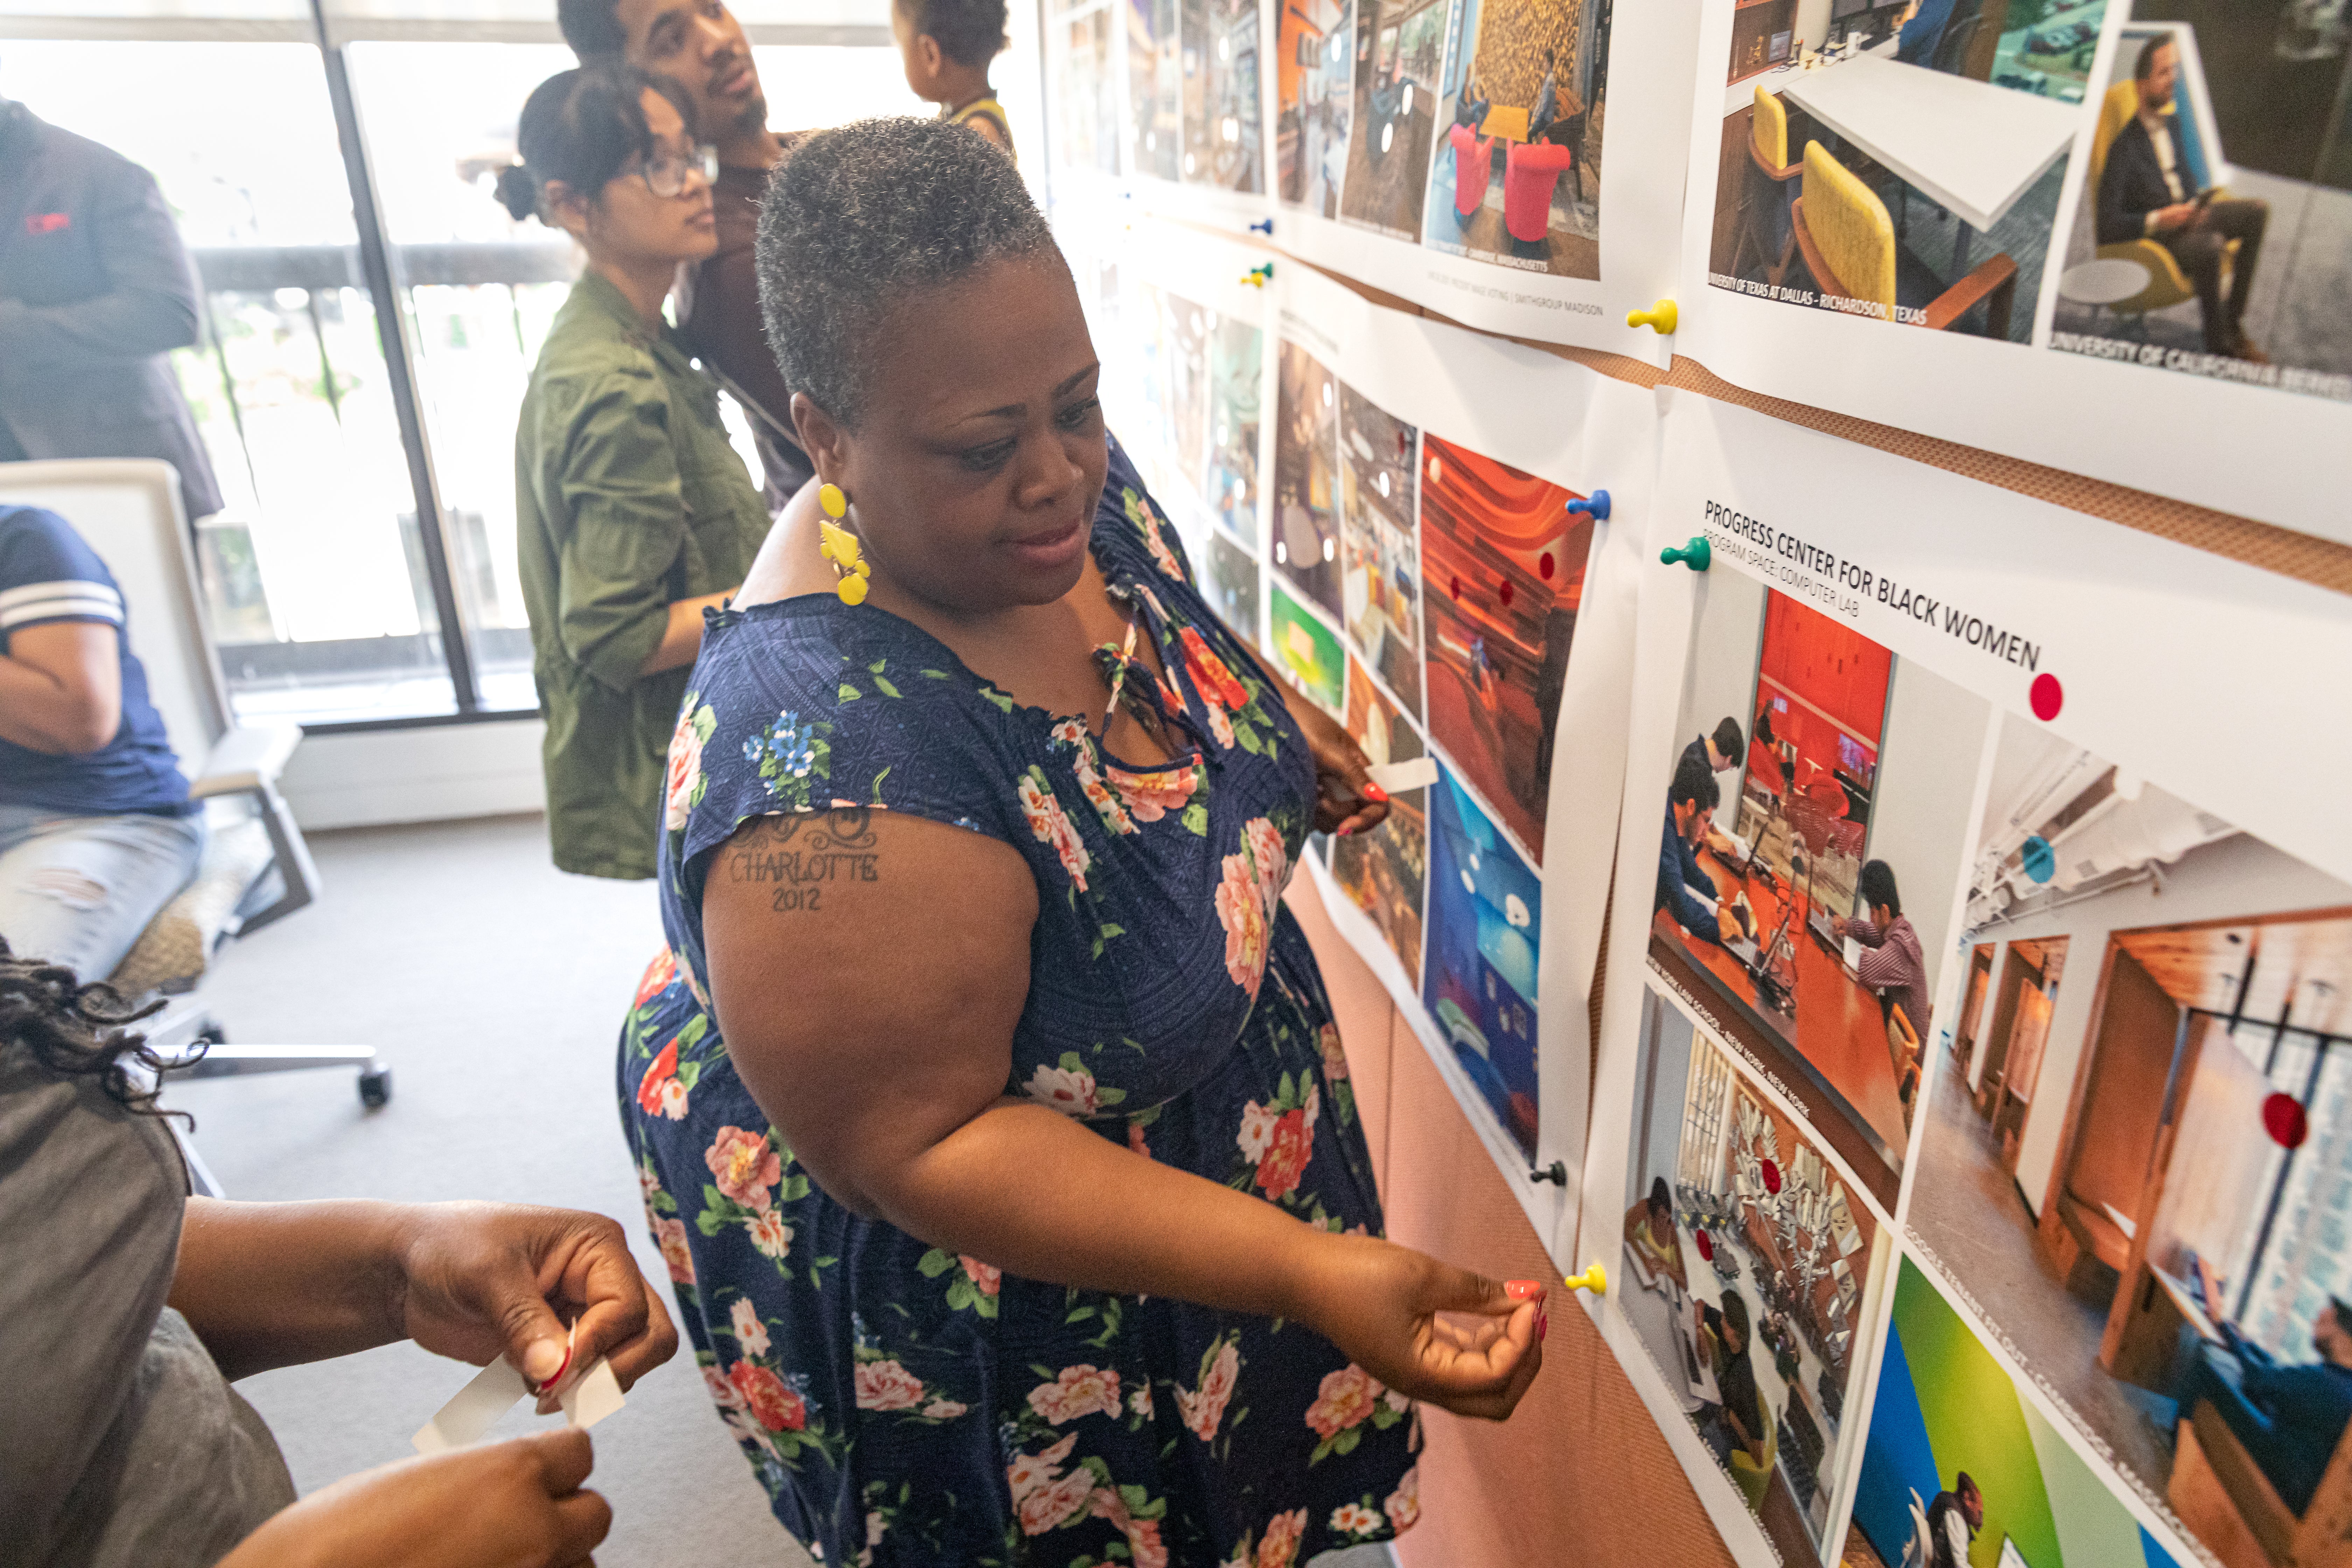 Community Designs Permanent Home For Progress Center For Black Women